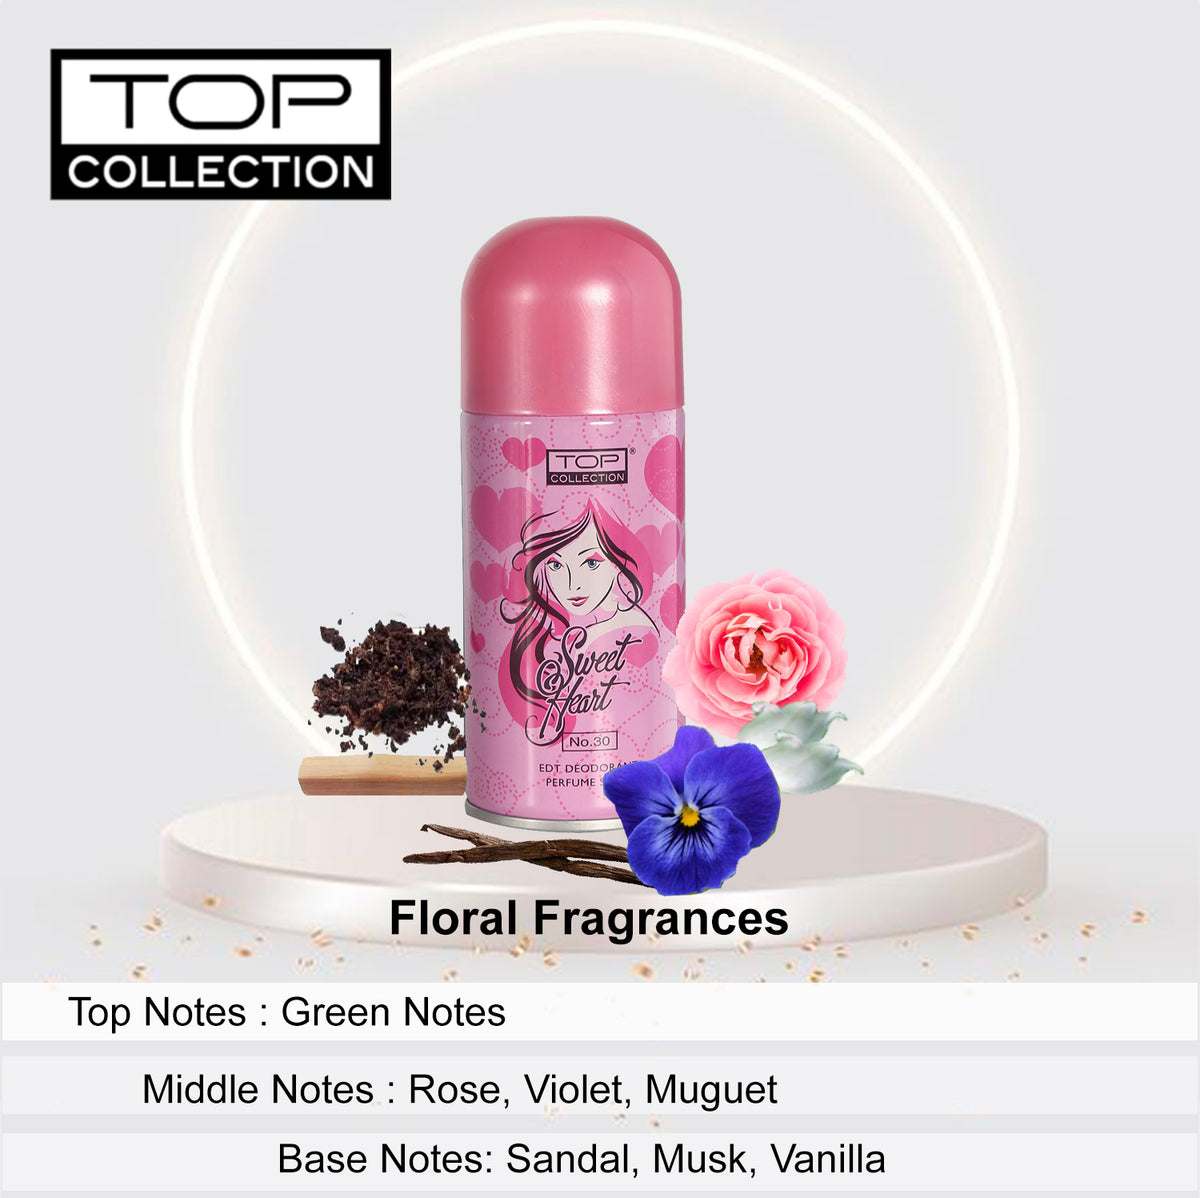 Top Collection Eau De Toilette Deodrant Perfume Spray - Sweet Heart, 150ml